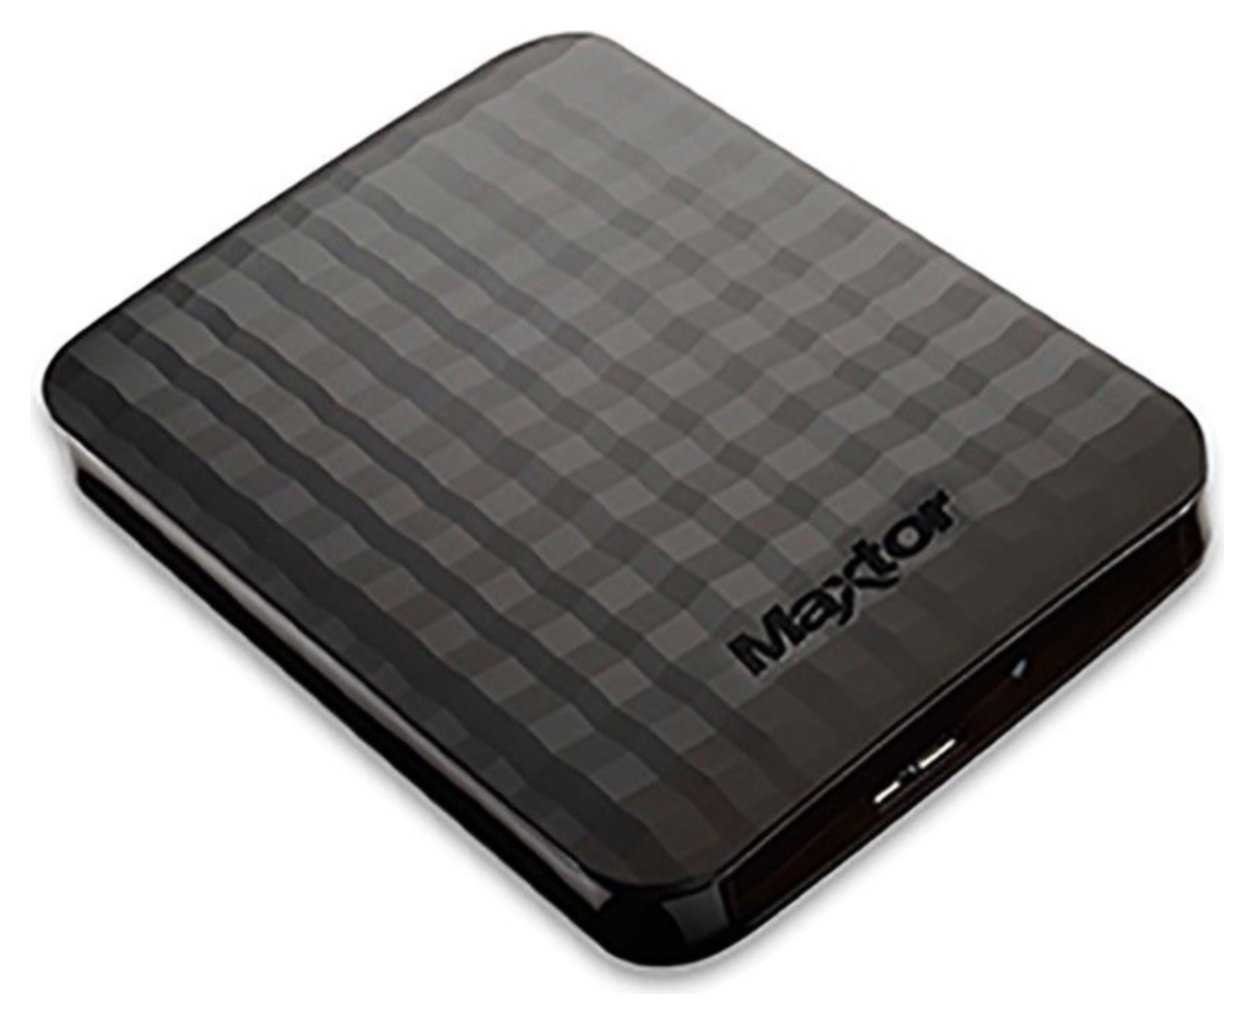 Maxtor M3 2TB Portable External Hard Drive